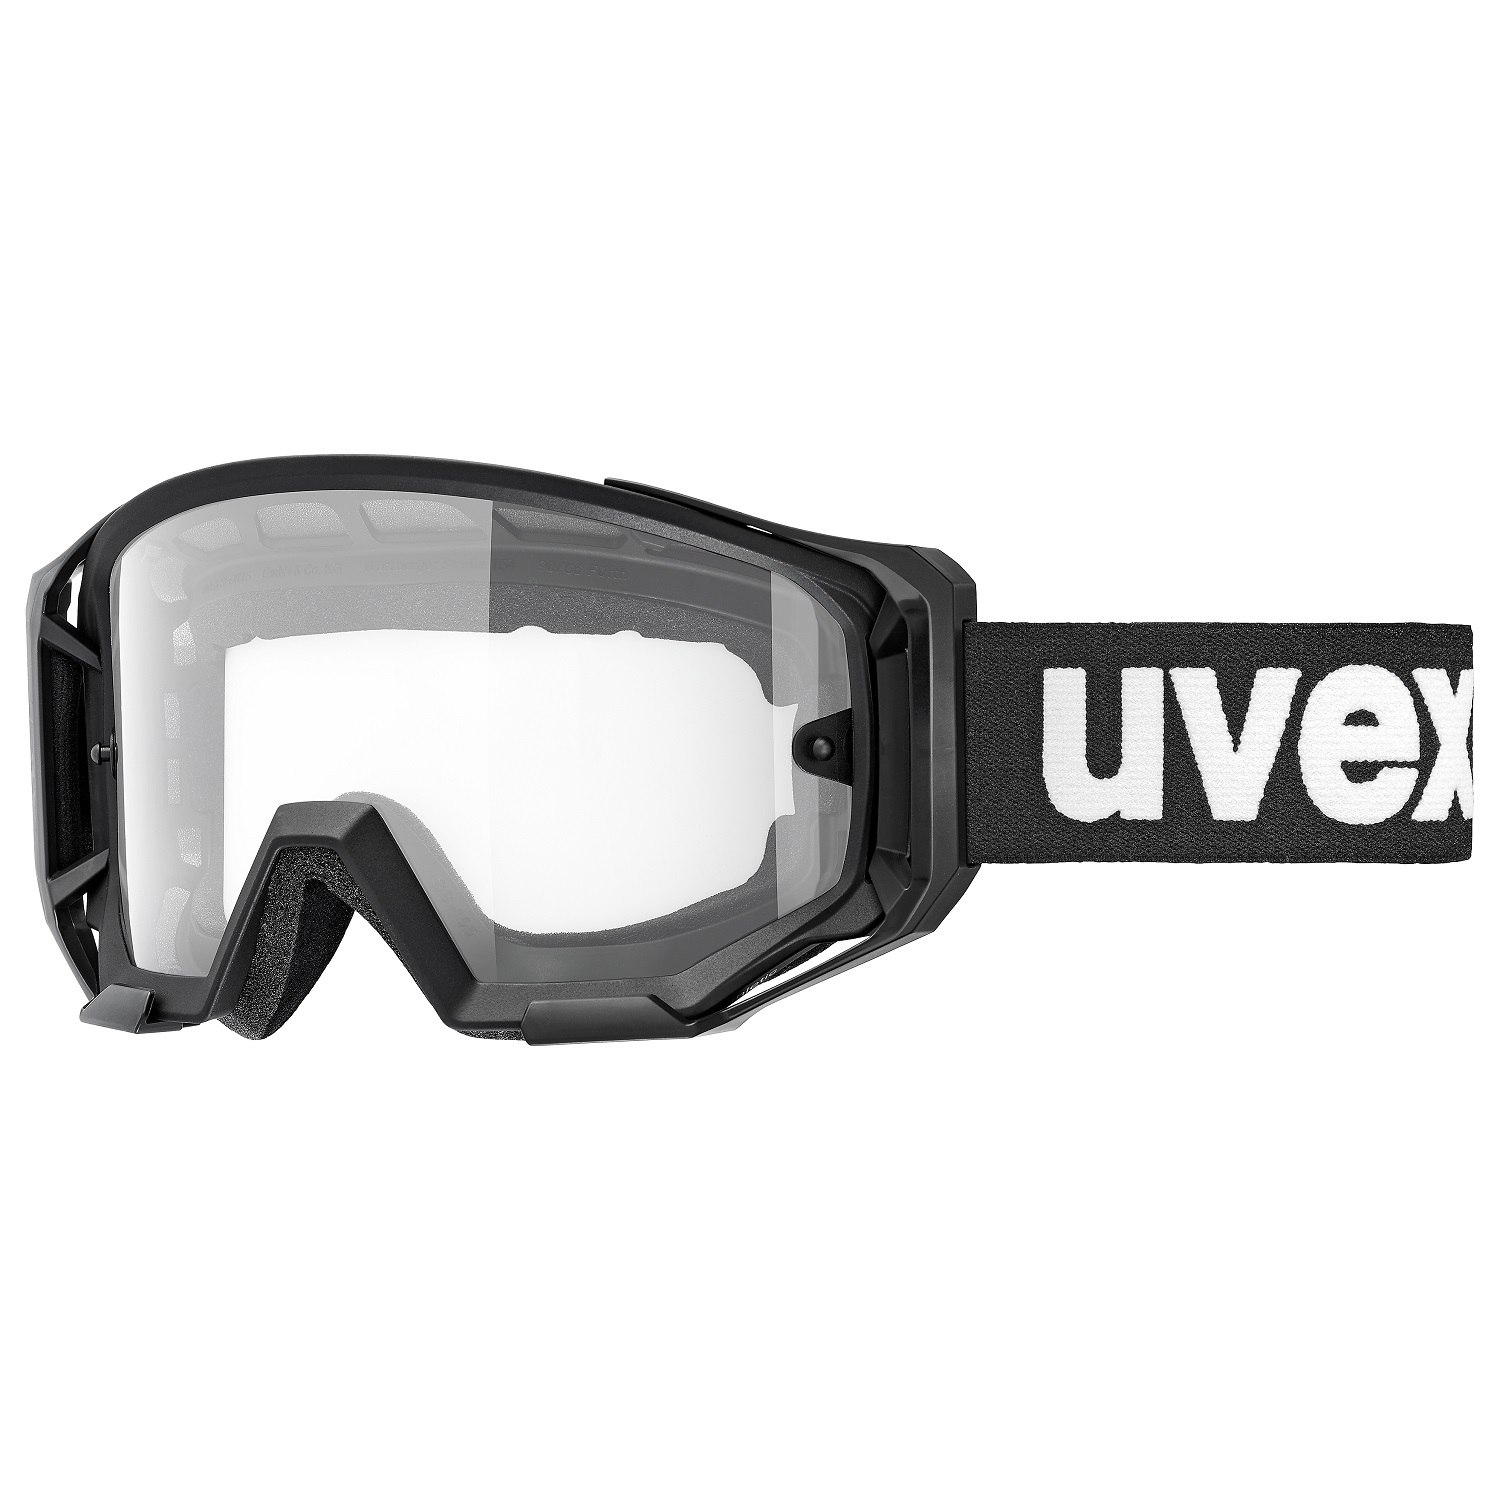 Produktbild von Uvex Athletic Bike Goggle - black - clear/clear